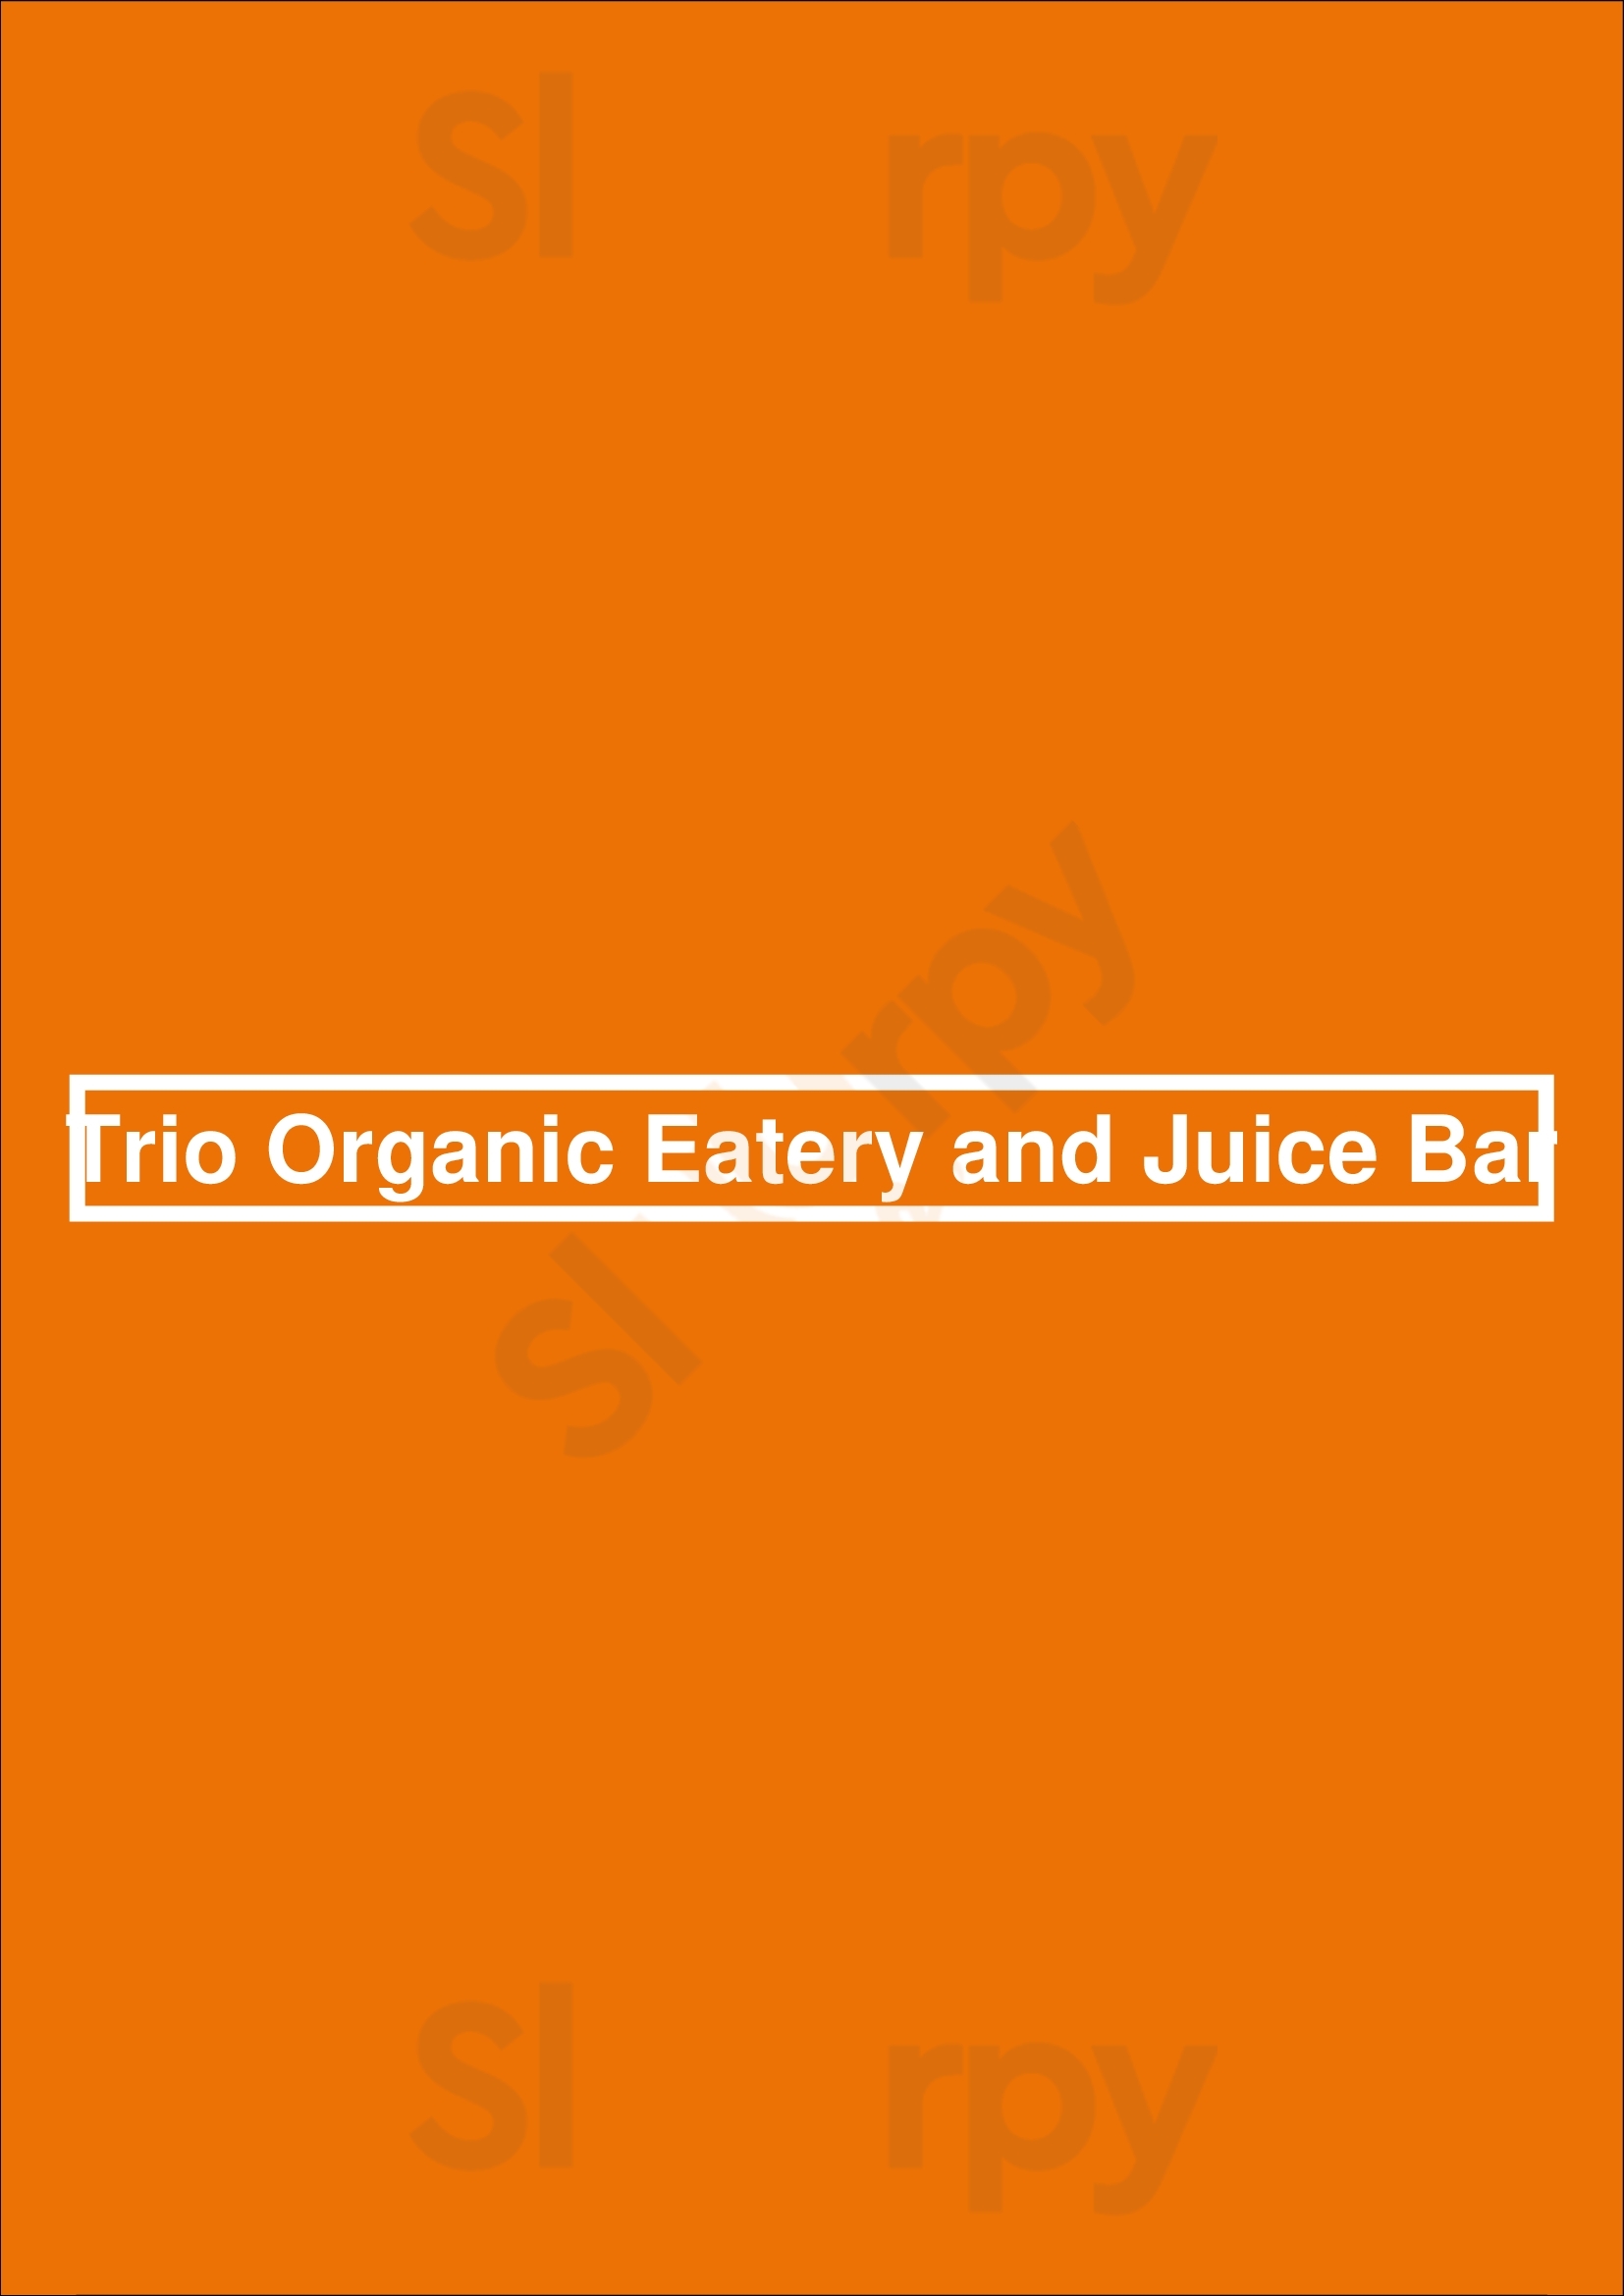 Trio Eatery And Juice Bar Chicago Menu - 1